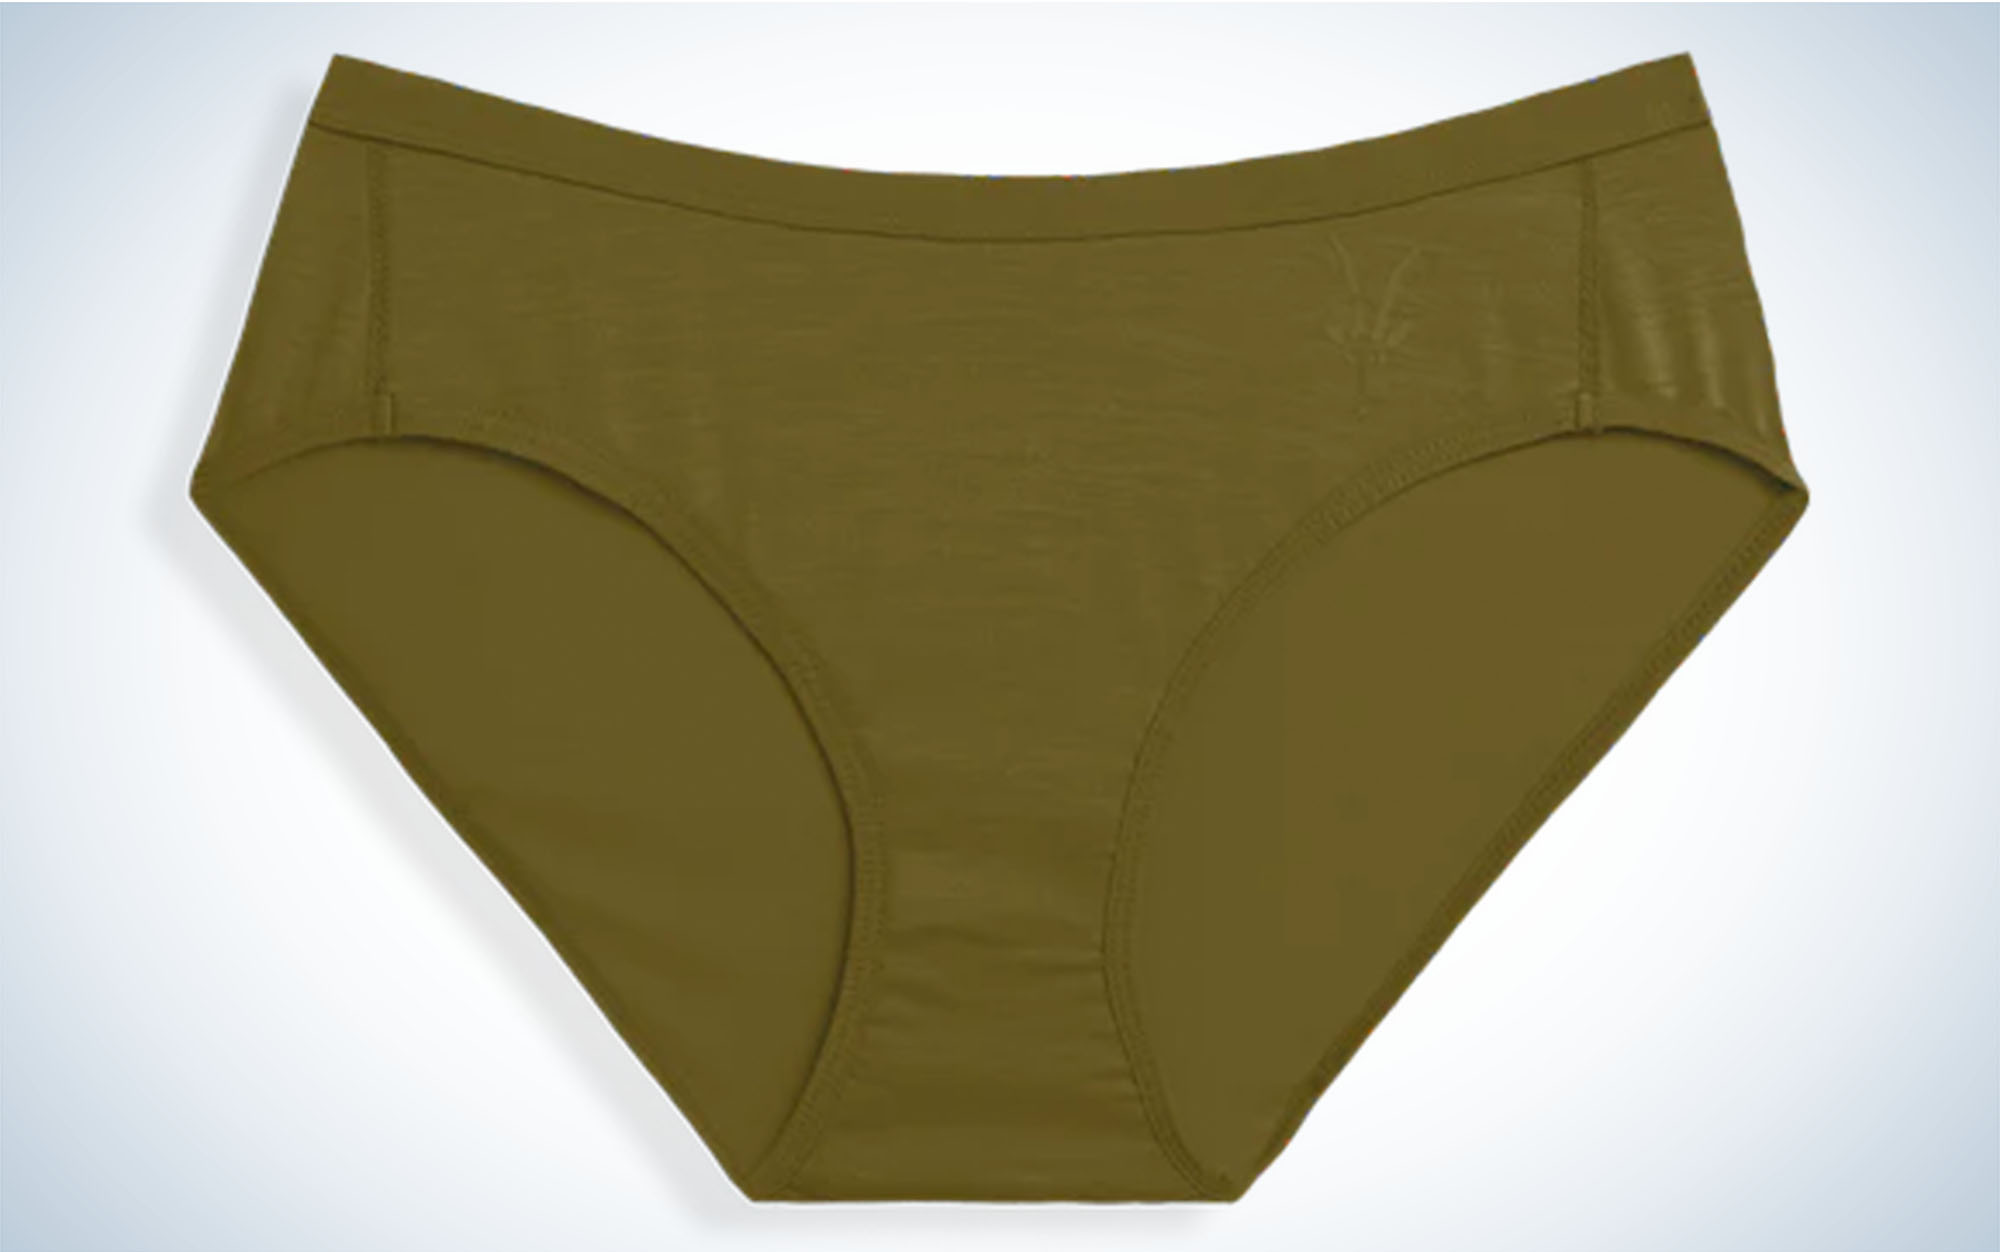  Snow Leopard Women's Breathable Underwear Bikini Panties Low  Waist Panties Stretch Briefs Undies for Women : Sports & Outdoors